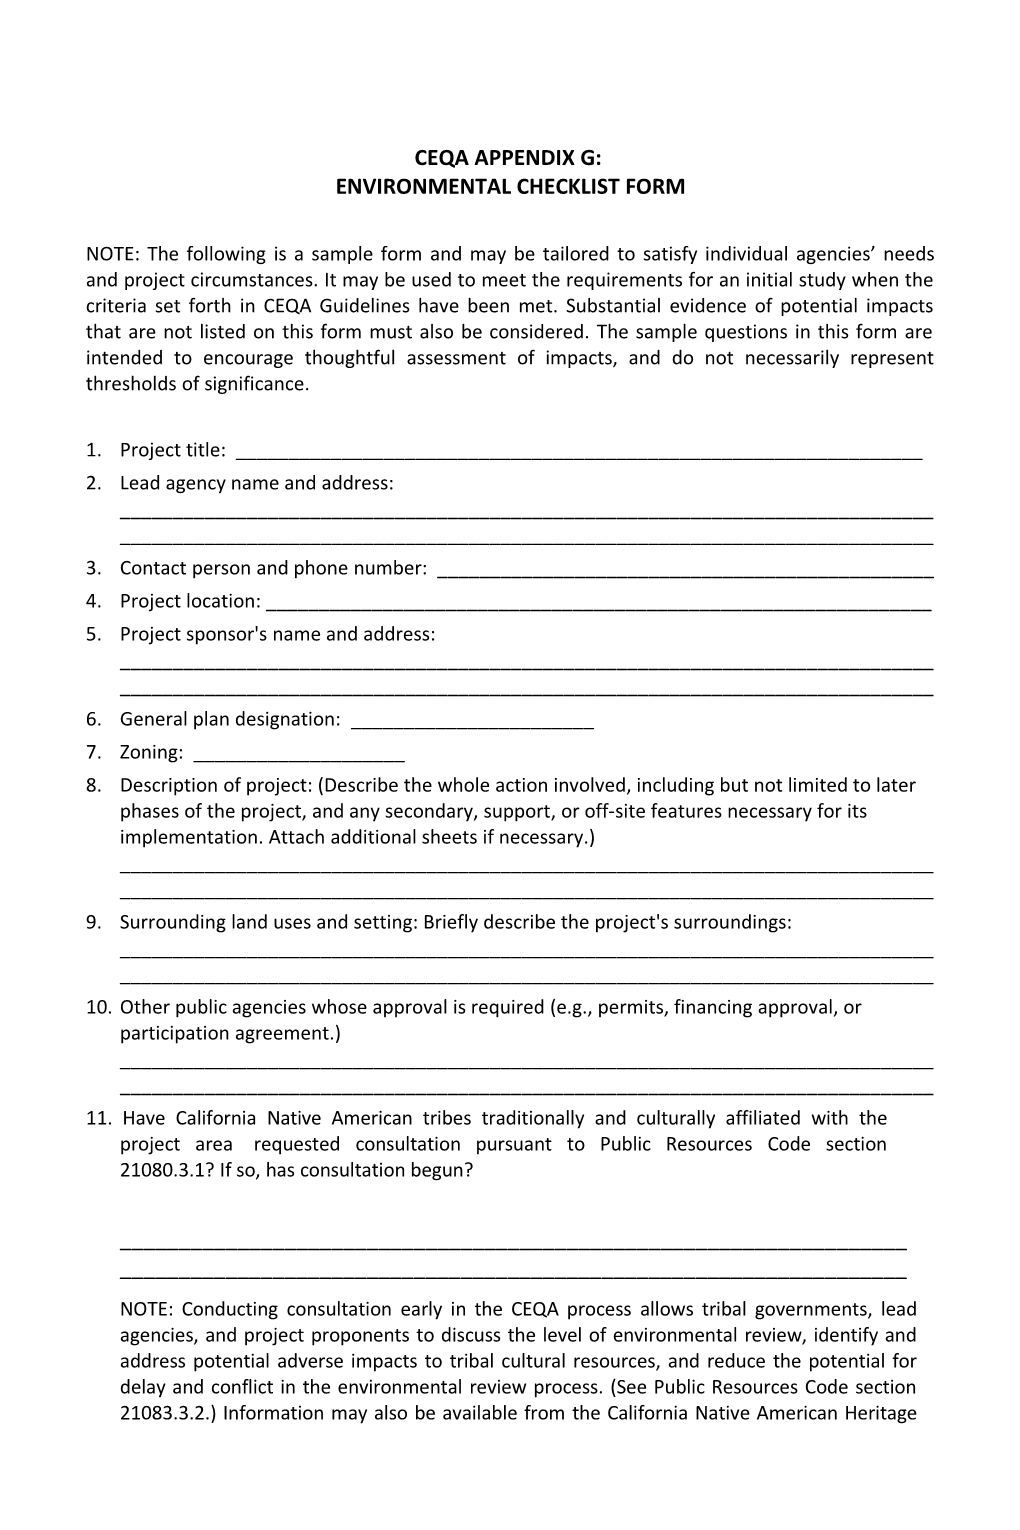 CEQA Appendix G: Environmental Checklist Form